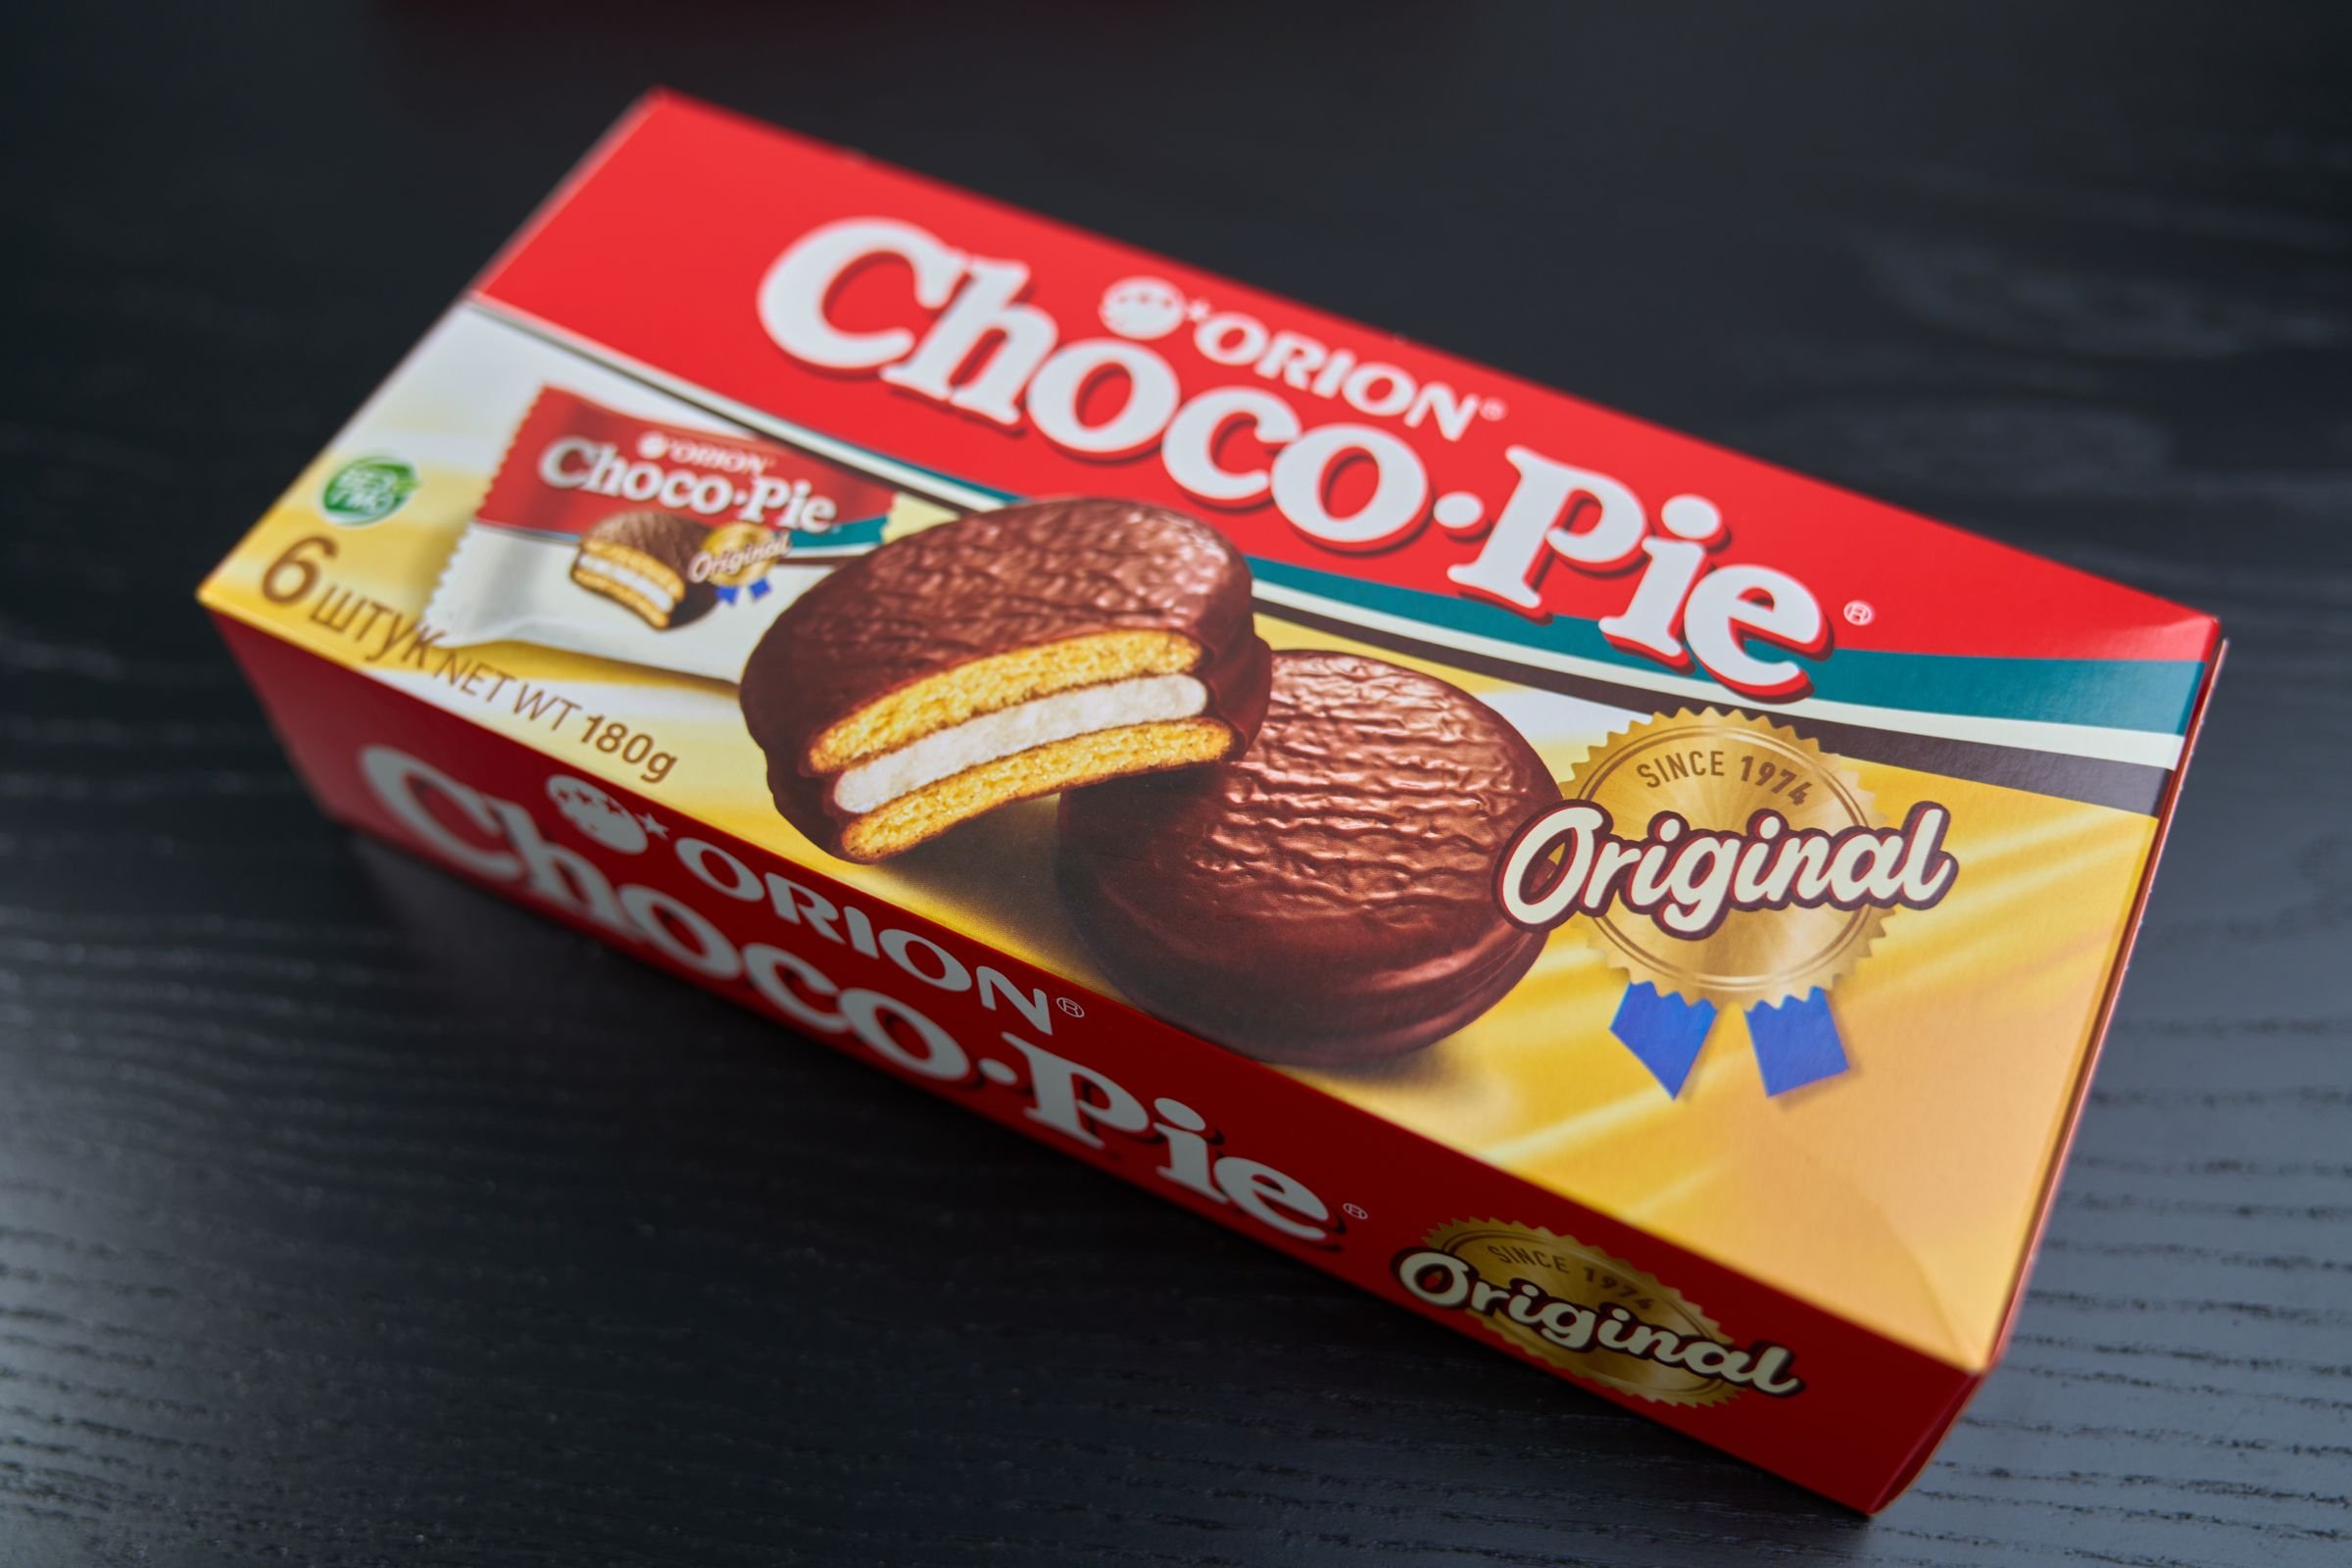 Chocopie. Чоко Пай Орион. Orion чокопай. Orion Choco pie Original. Бисквит «чокопай Орион».